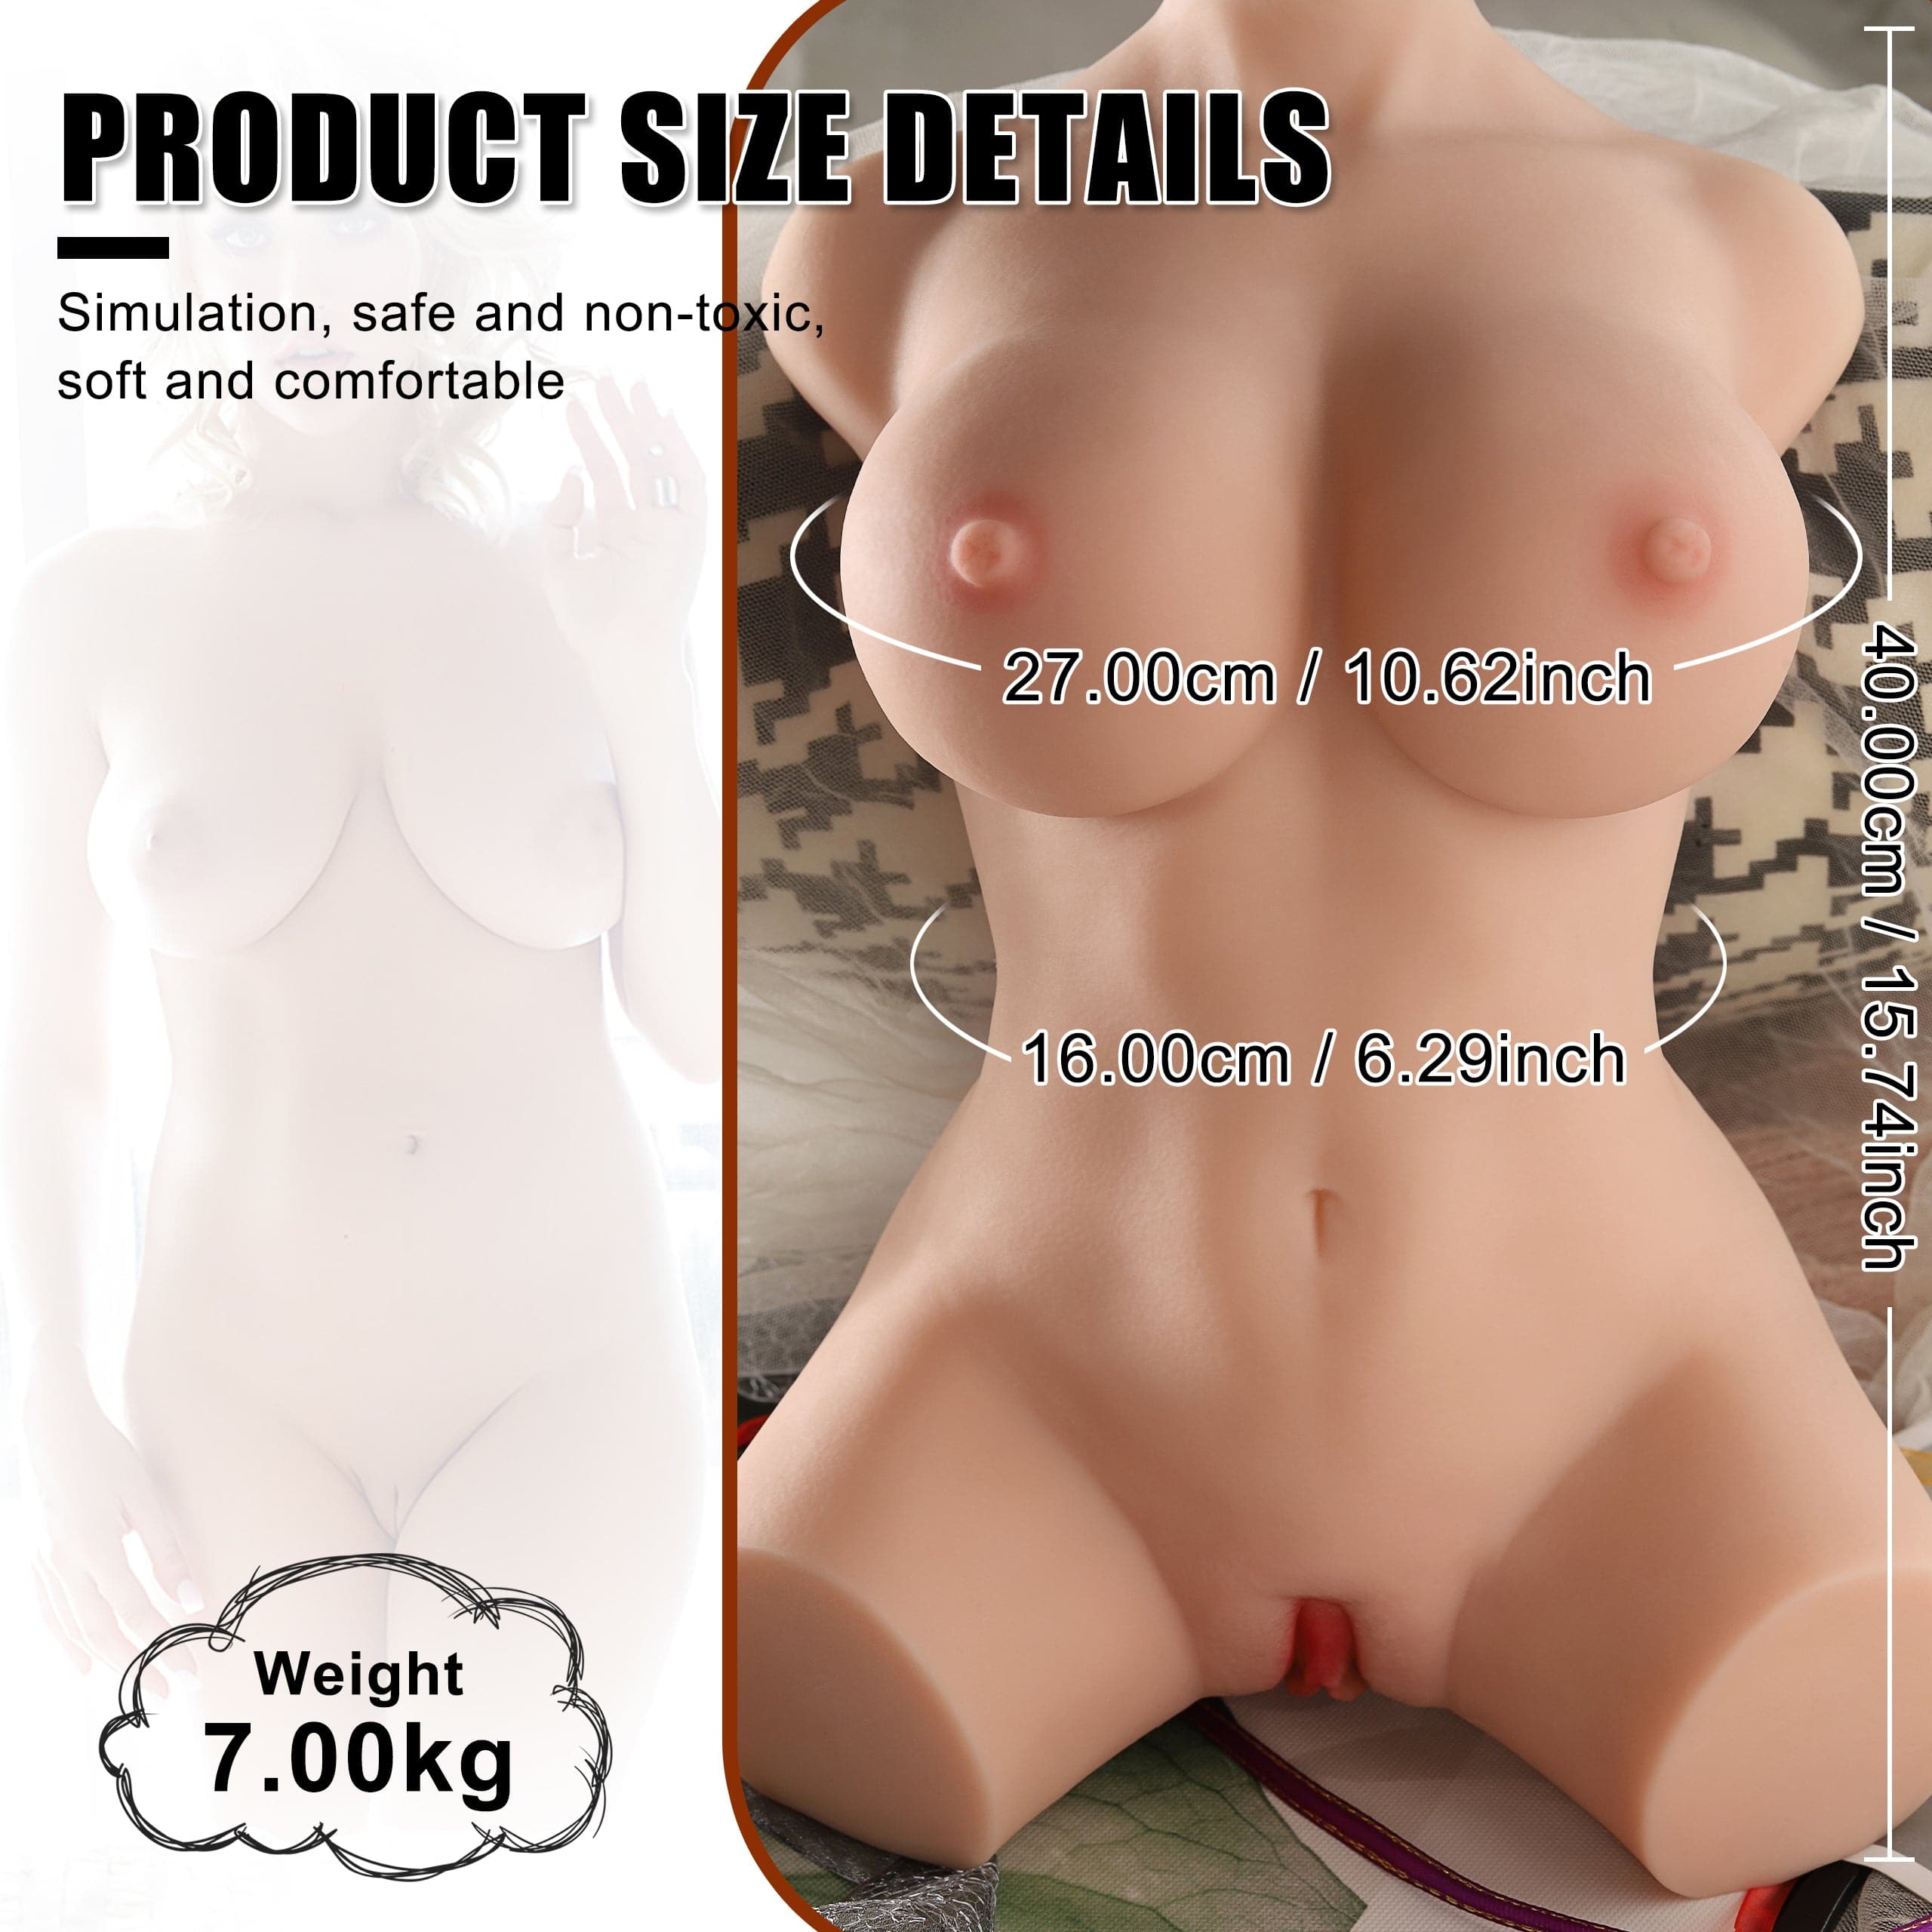 15.43lb Merida sex doll big breasts and 3D sexy buttock